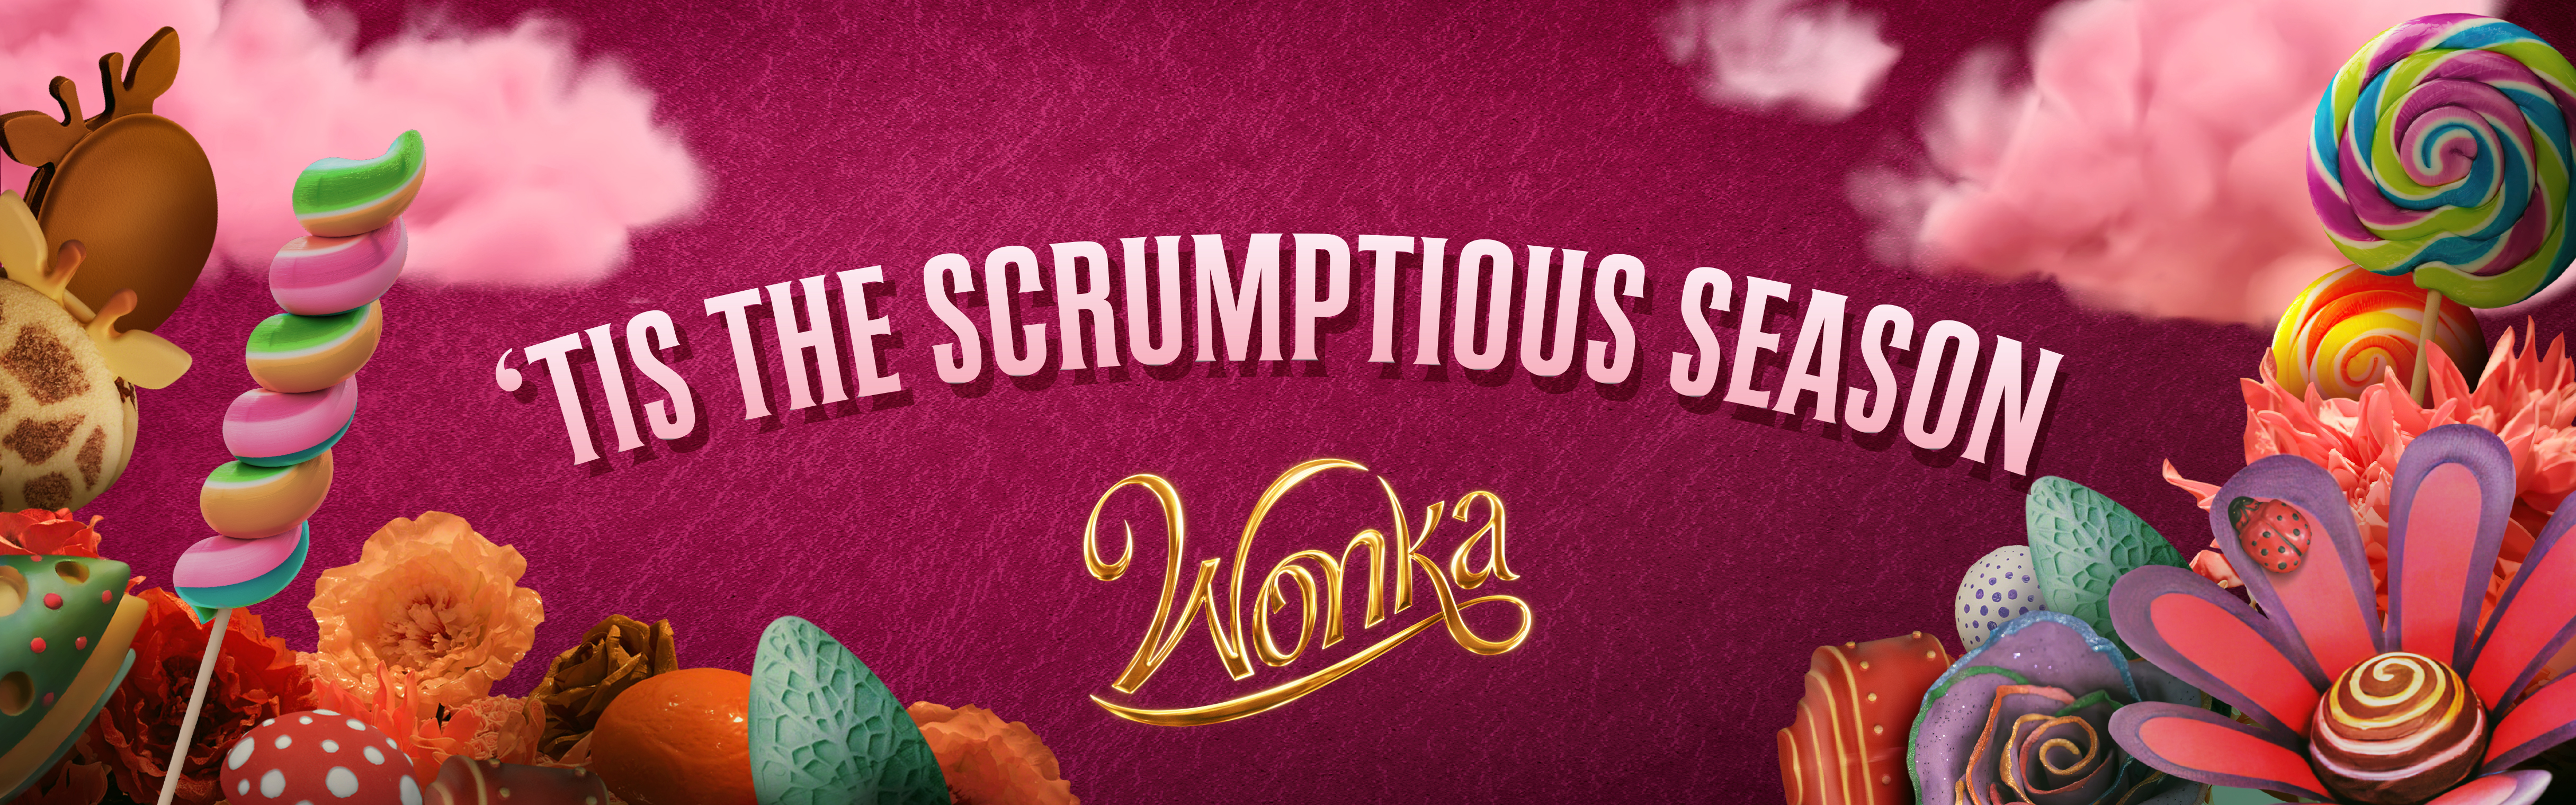 Wonka Web Banner.jpg